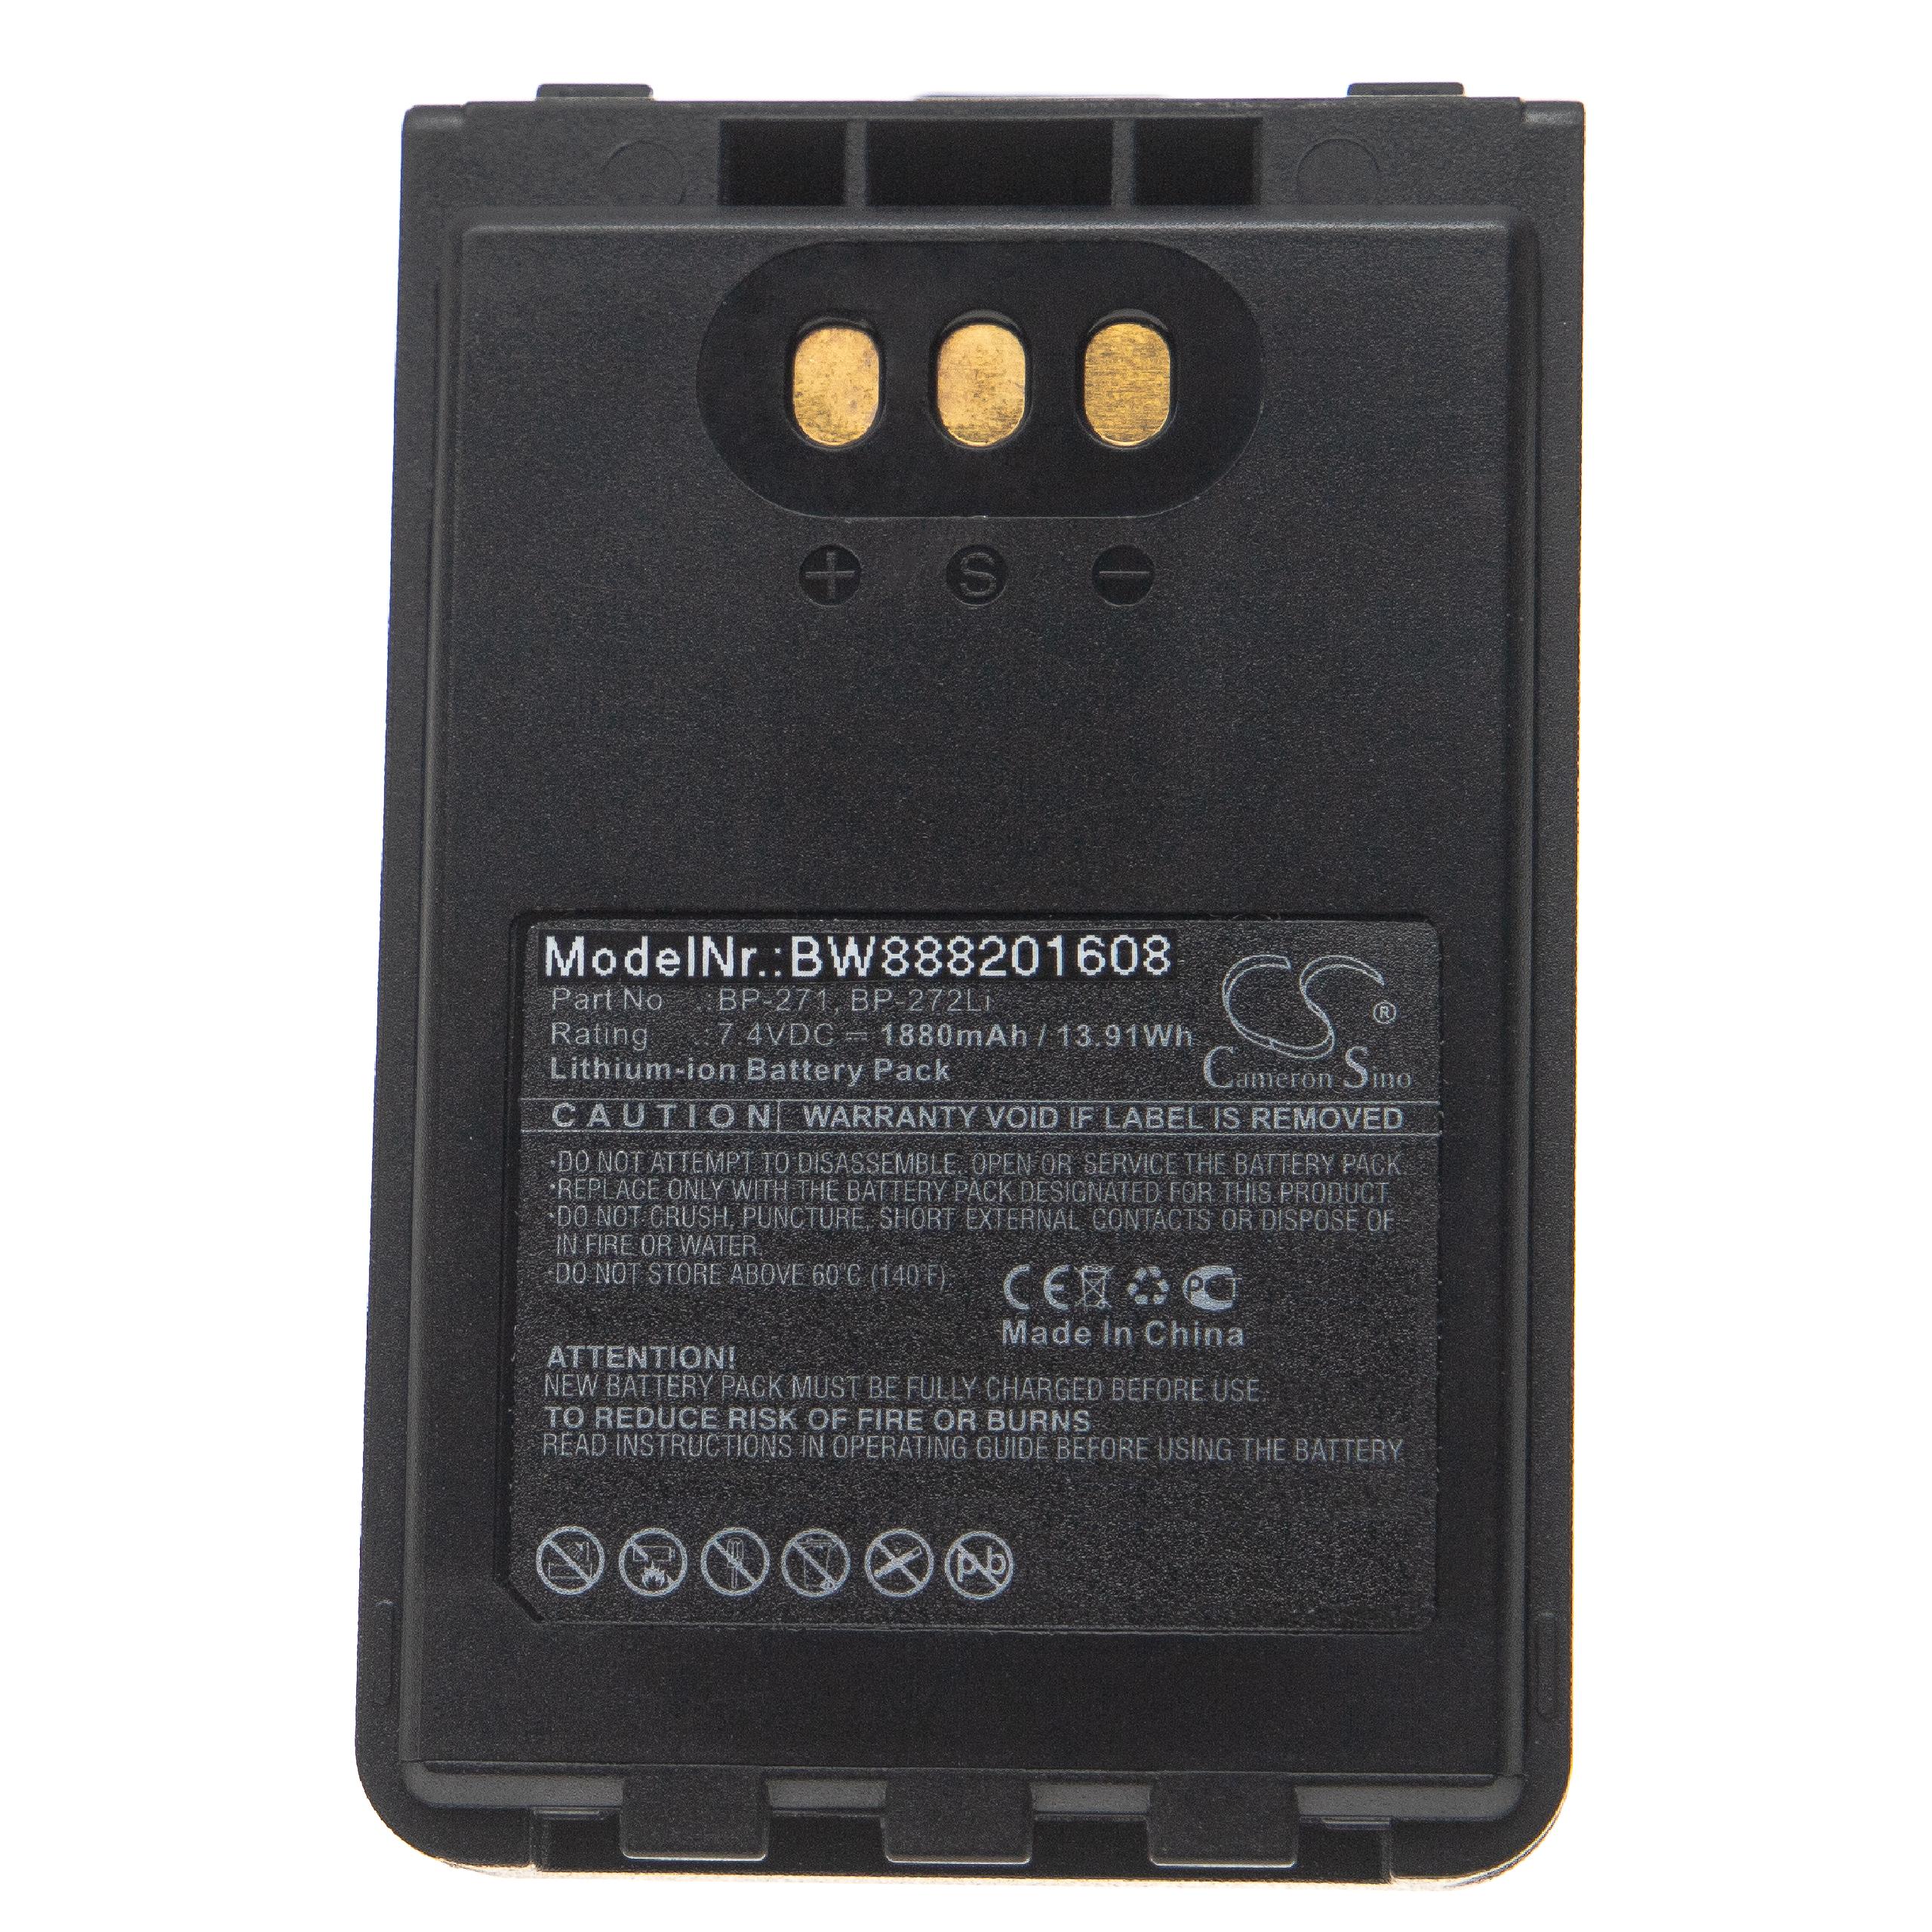 Batería reemplaza Icom BP-271, BP-272Li para radio, walkie-talkie Icom - 1880 mAh 7,4 V Li-Ion